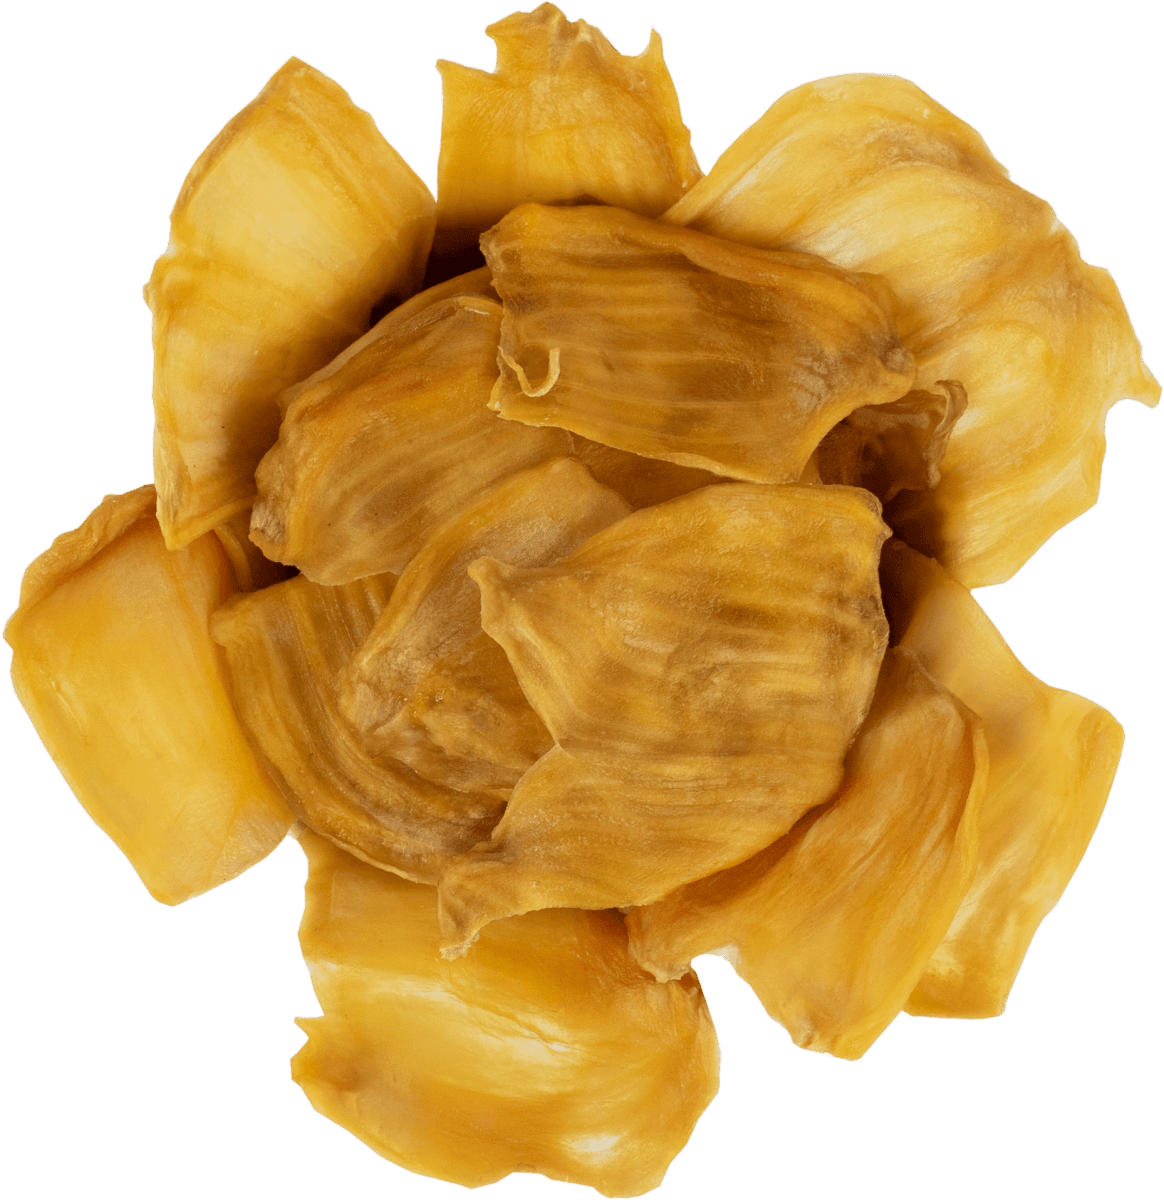 Bio getrocknete süße Jackfruit - 2,5 kg Beutel - H&T Rohstoffe